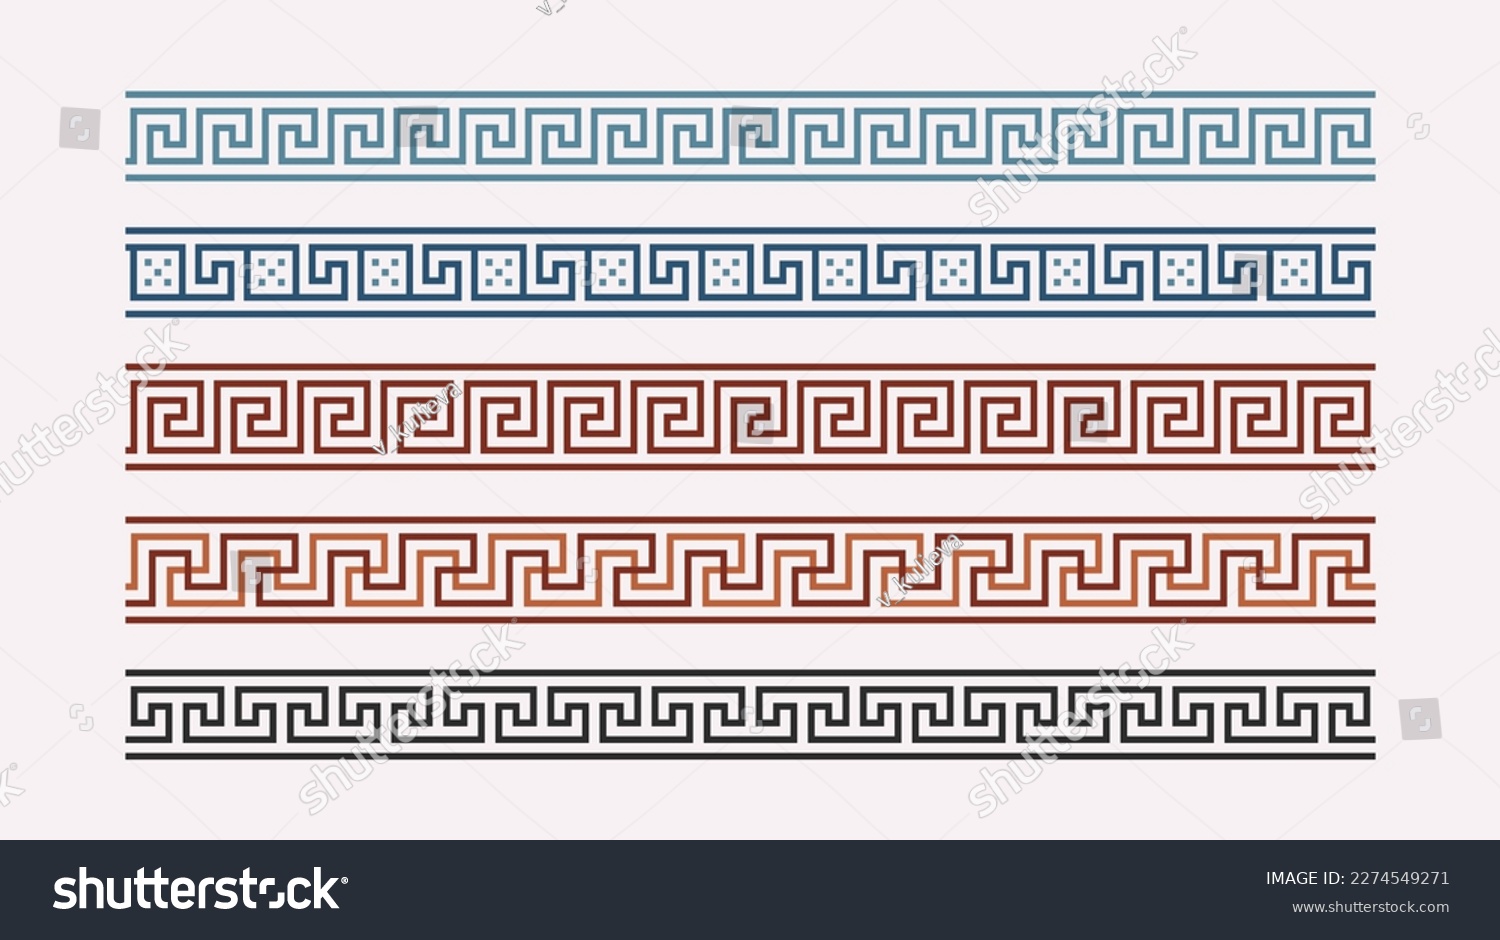 Greek key ornaments set. Meander pattern collection. Repeating geometric meandros motif. Greek fret design. Ancient decorative borders. Vector decoration #2274549271